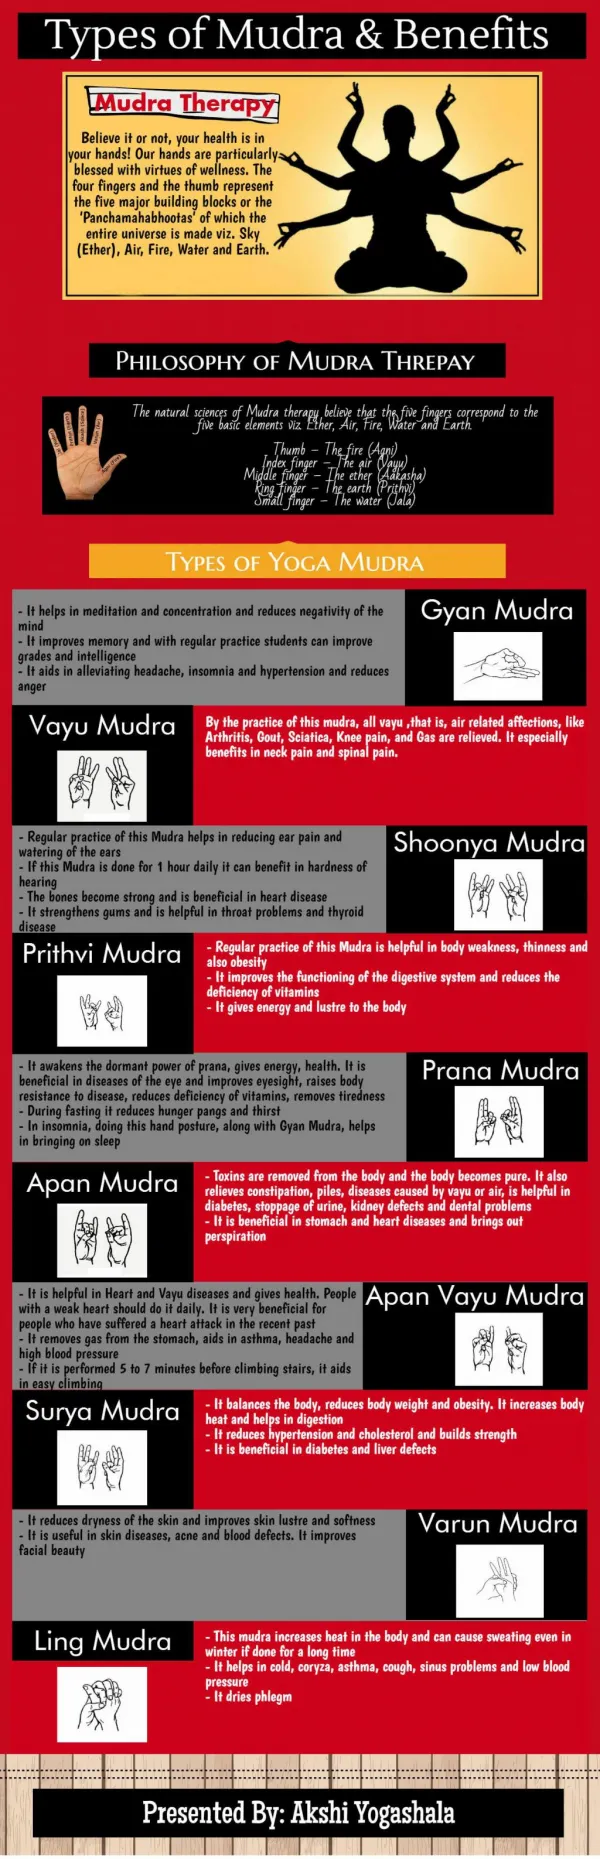 Types & Benefits of Mudra